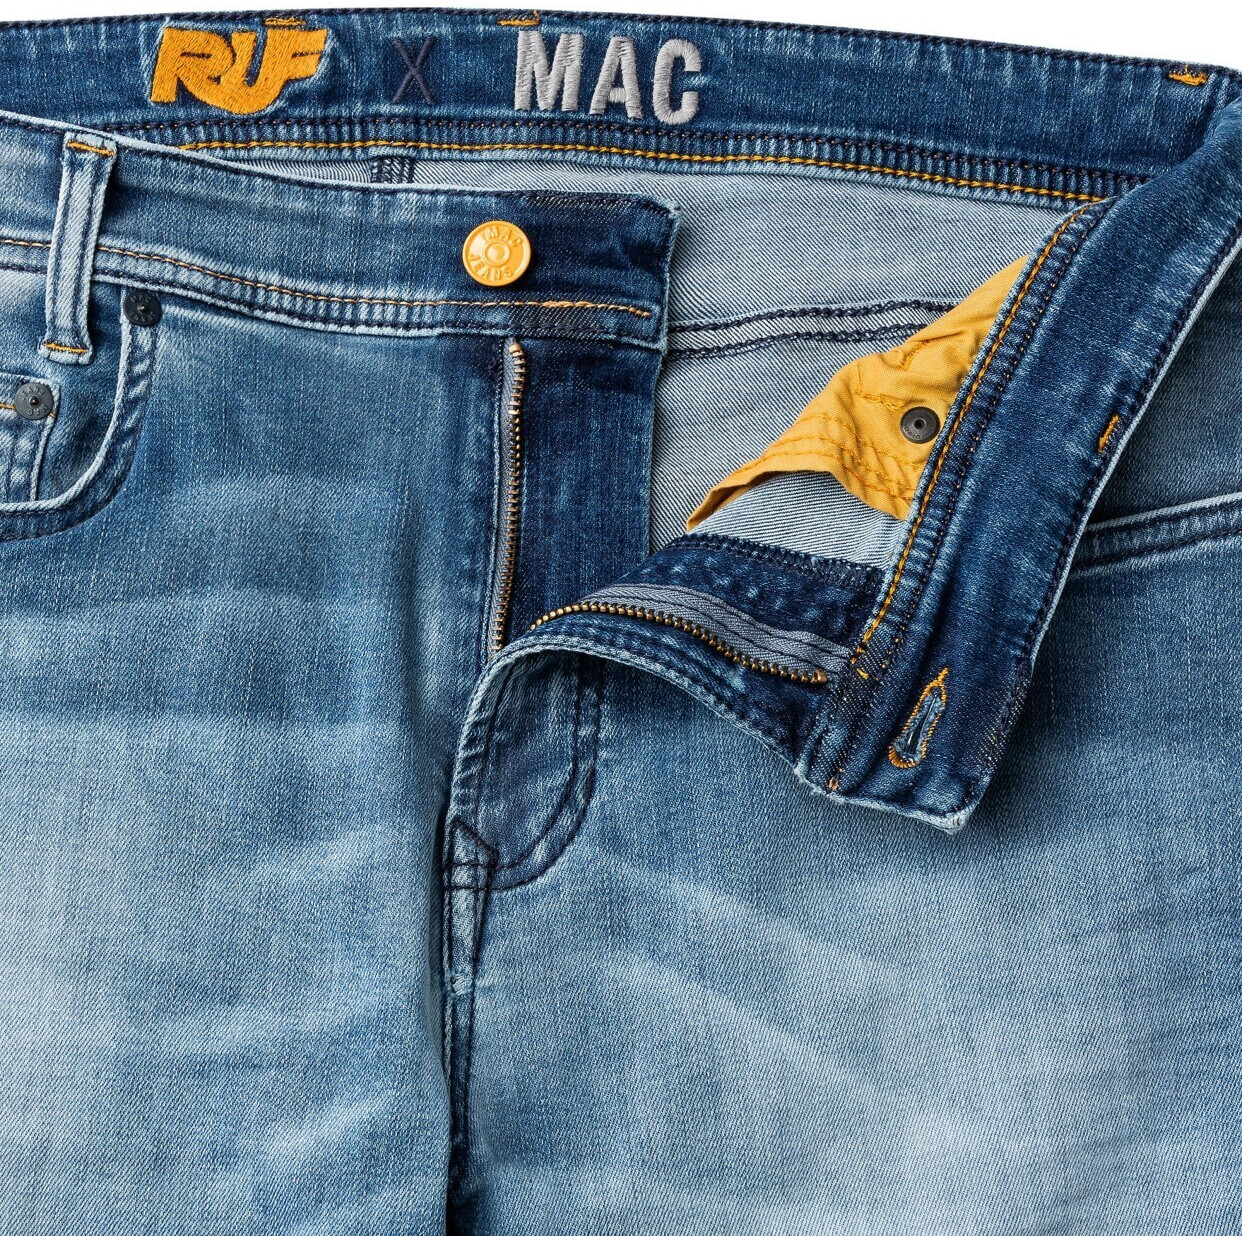 76,79 MAC | € Macflexx ab venice blue Preisvergleich used bei